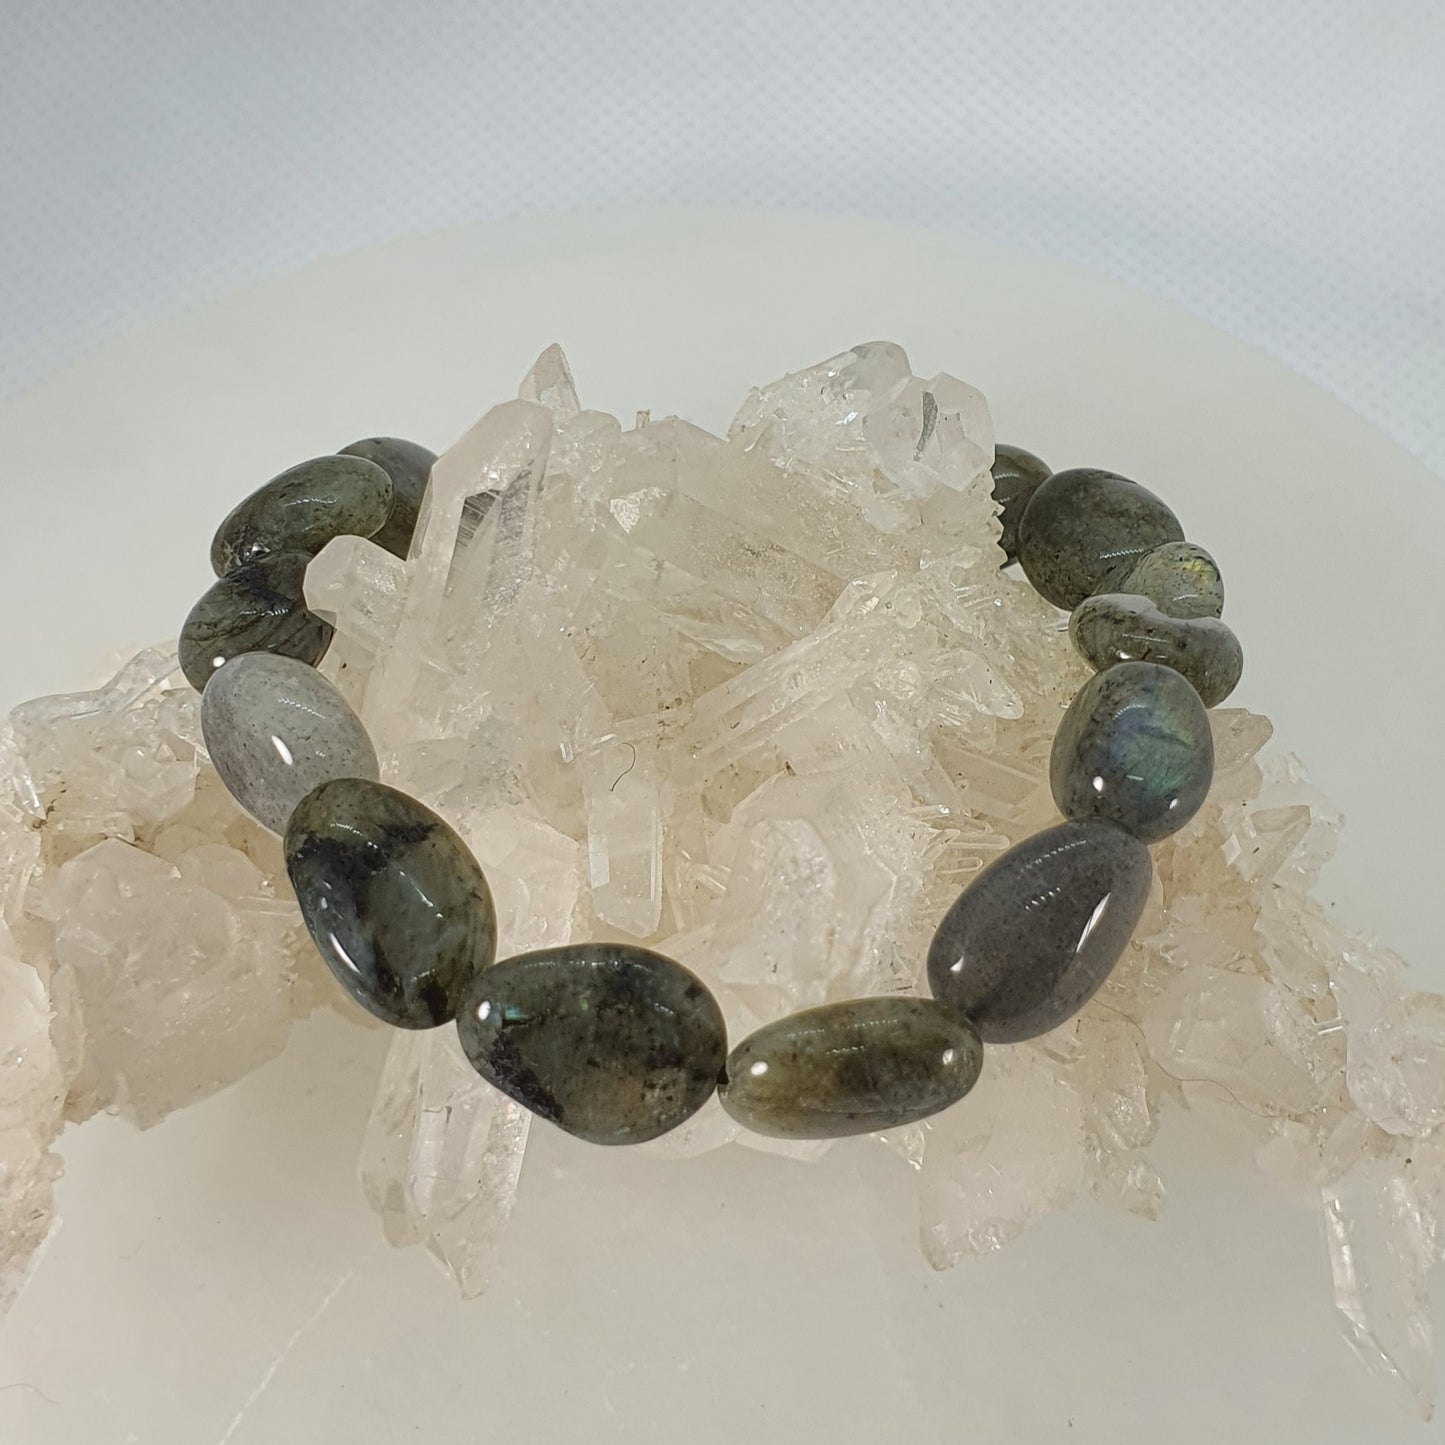 Crystals - Labradorite Bracelet